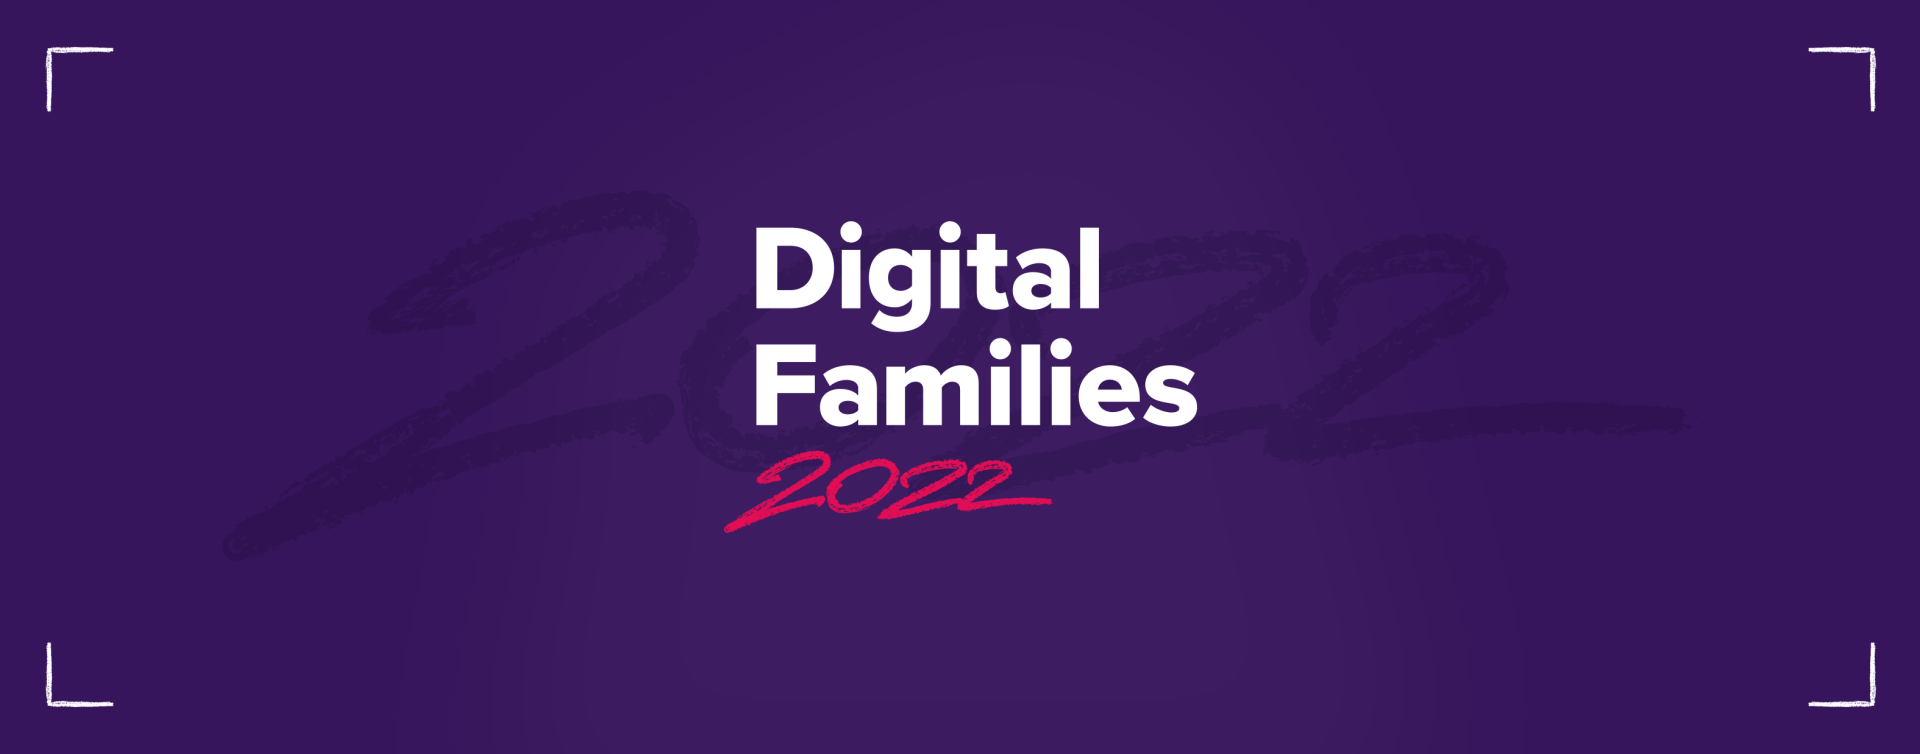 Digital Families 2022: Q&A with Natalie Foos 